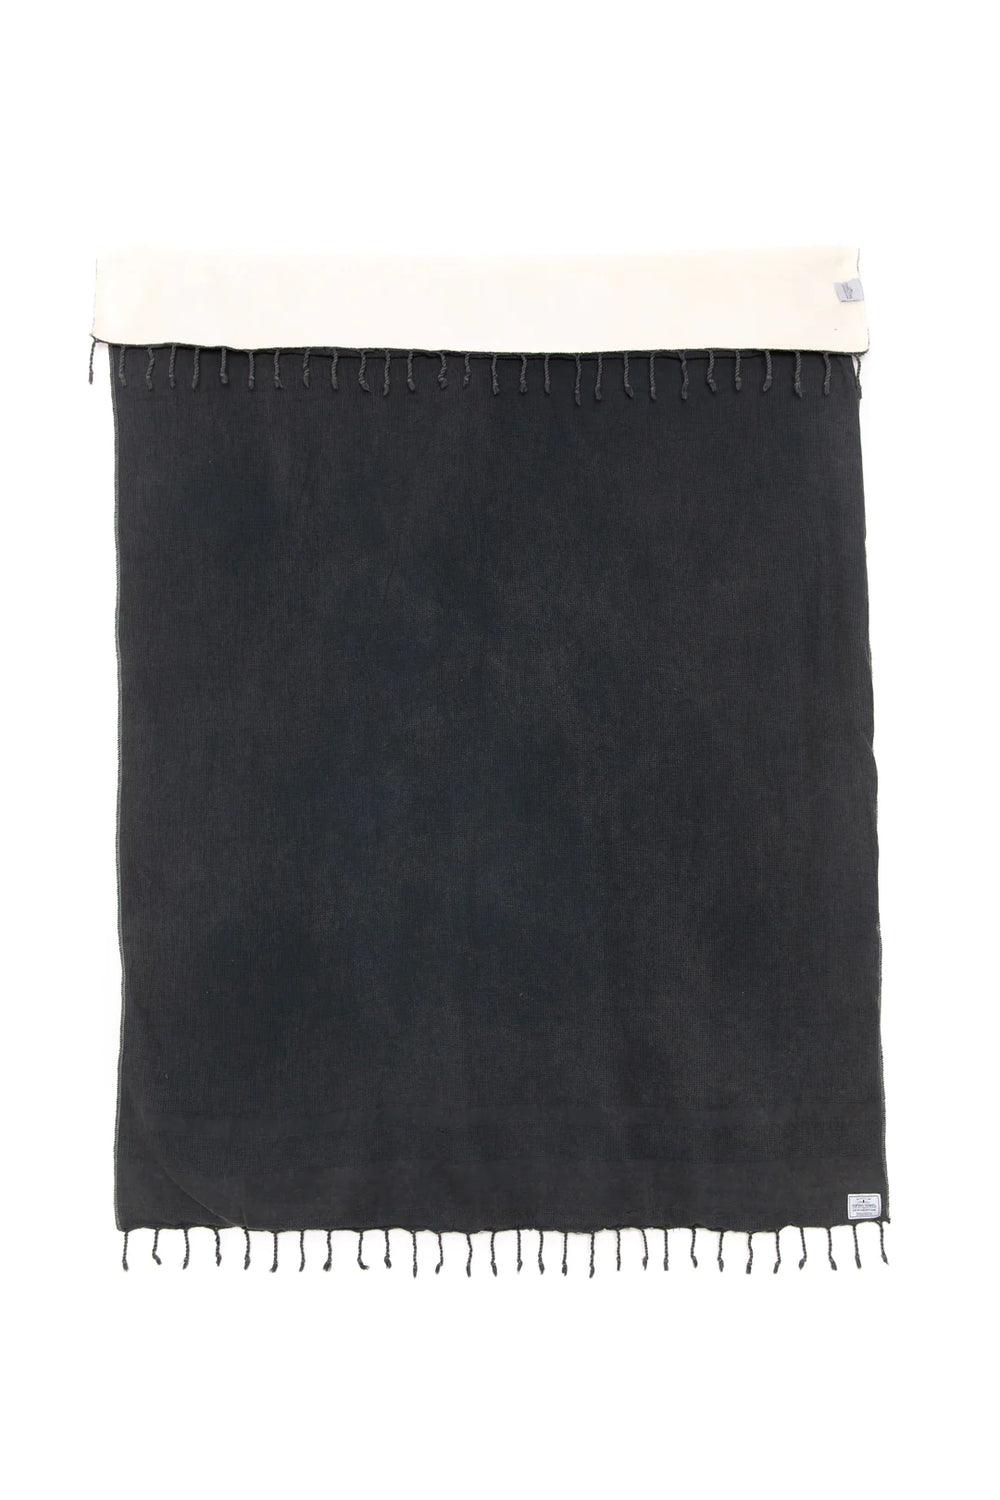 Tofino Towels | THE SHORE WASHED WAFFLE THROW - Oak + Tonic